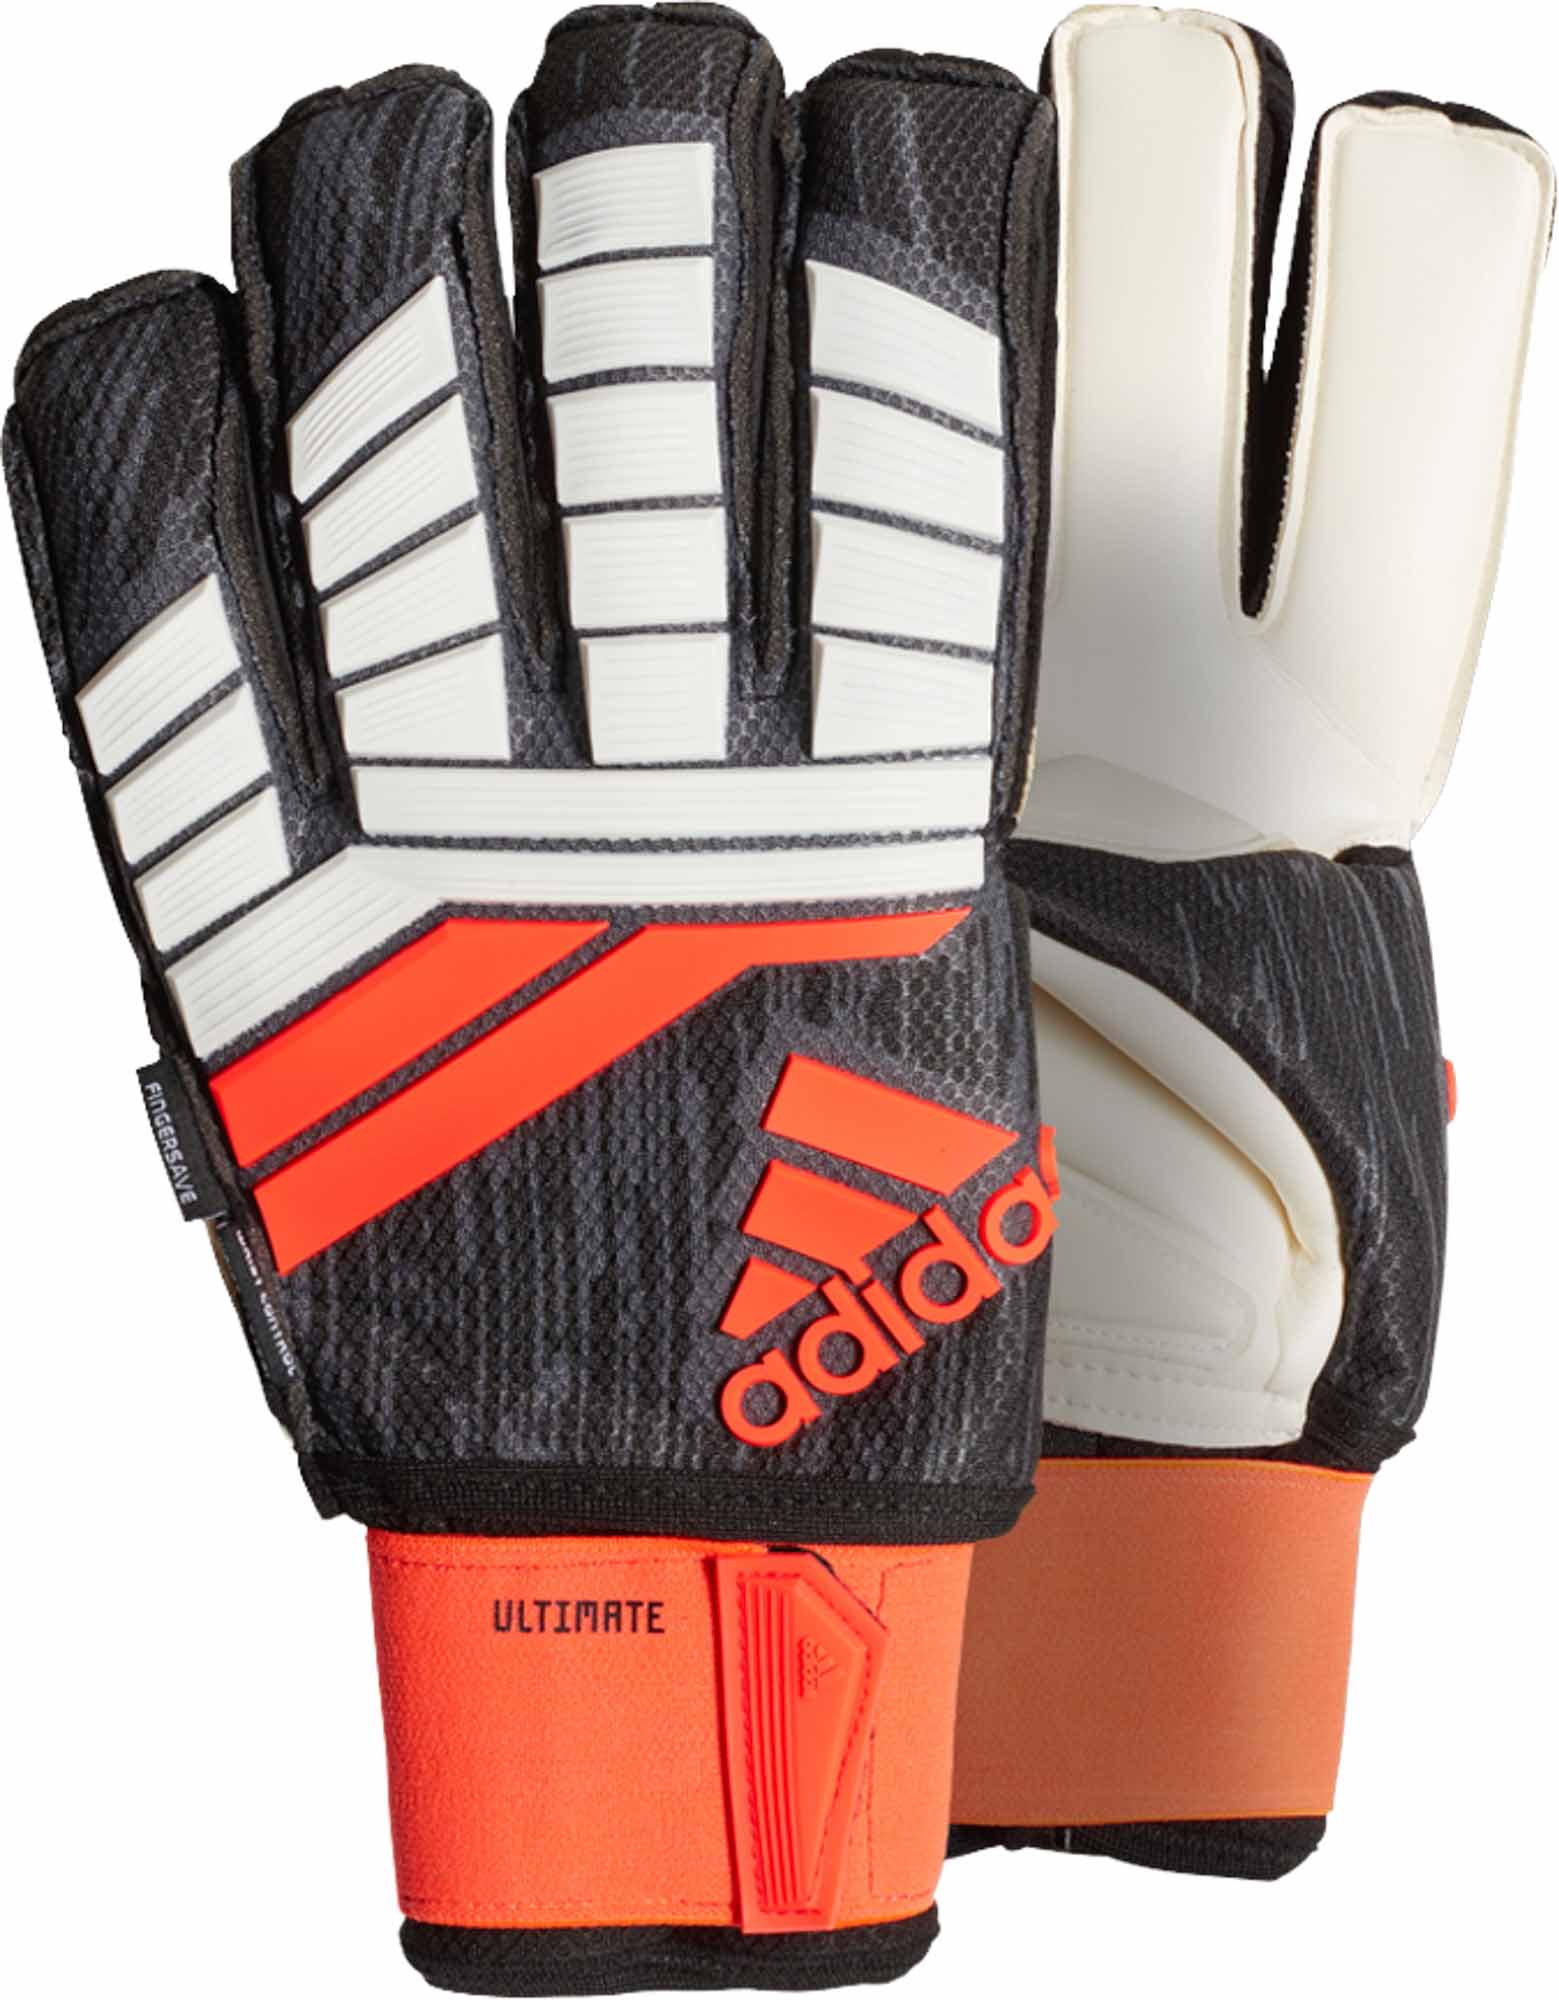 adidas ultimate goalkeeper gloves